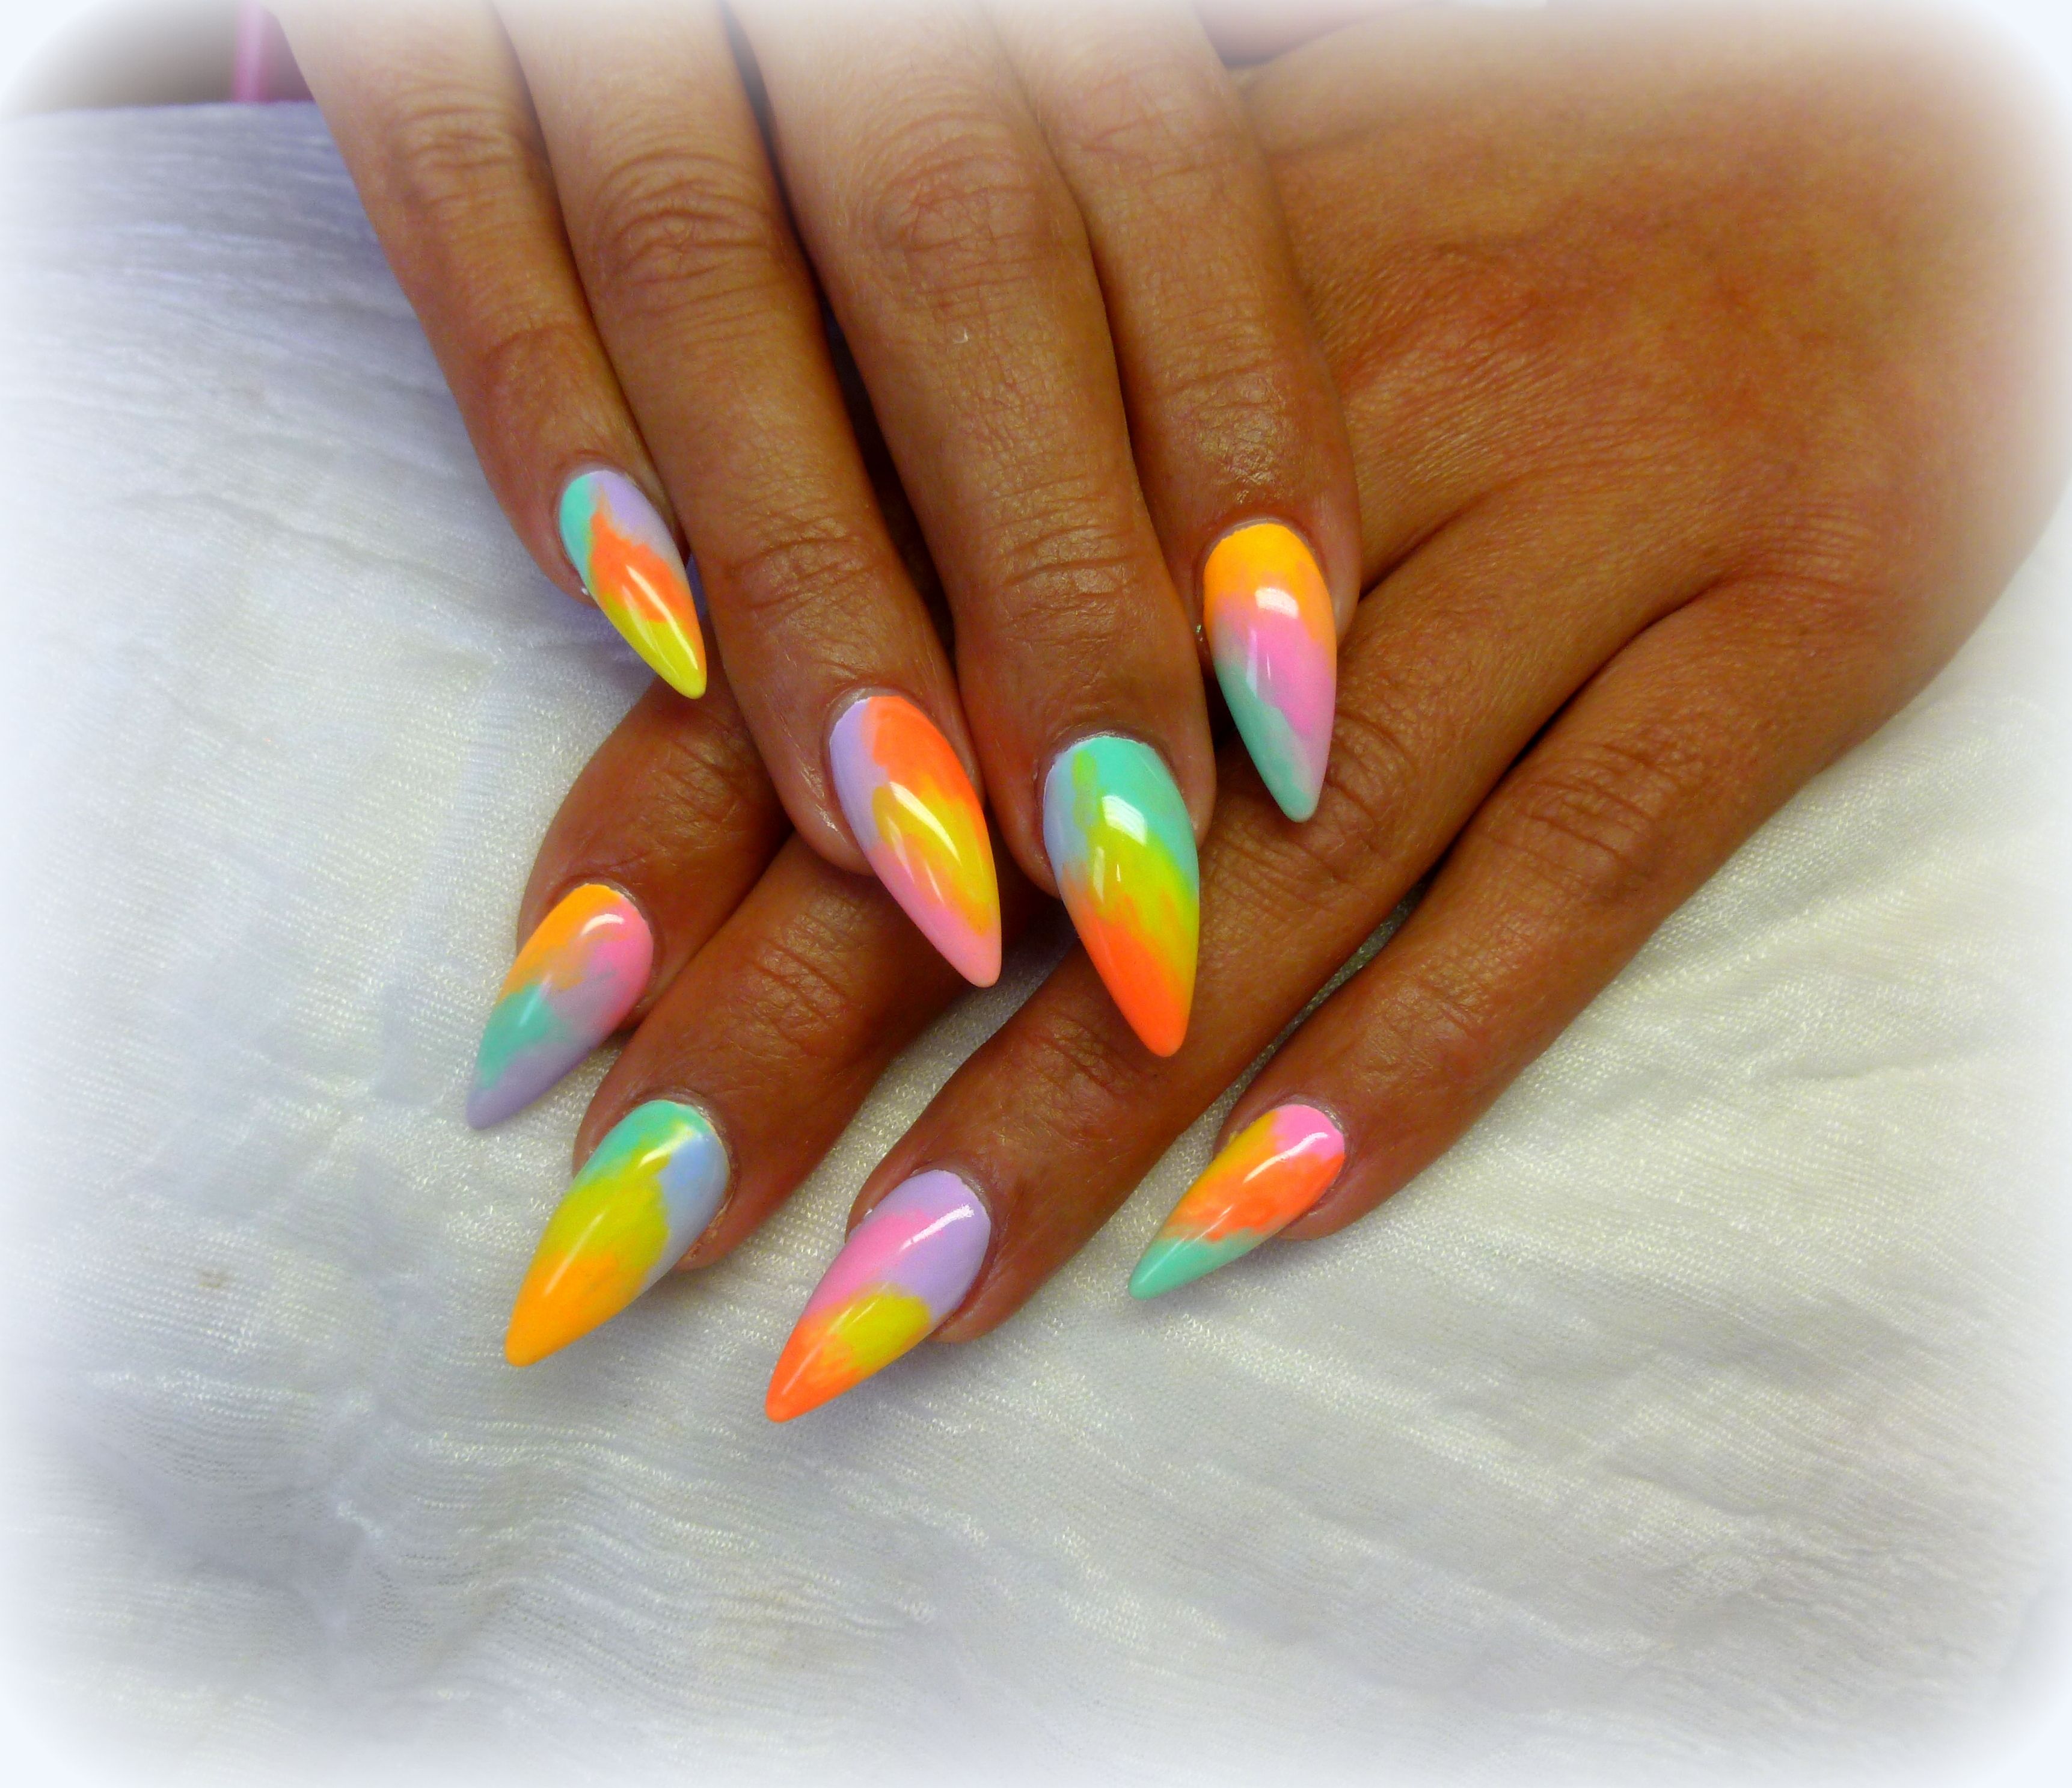 Stiletto Nails With Images Neonove Nehty Barevne Nehty Gelove Nehty